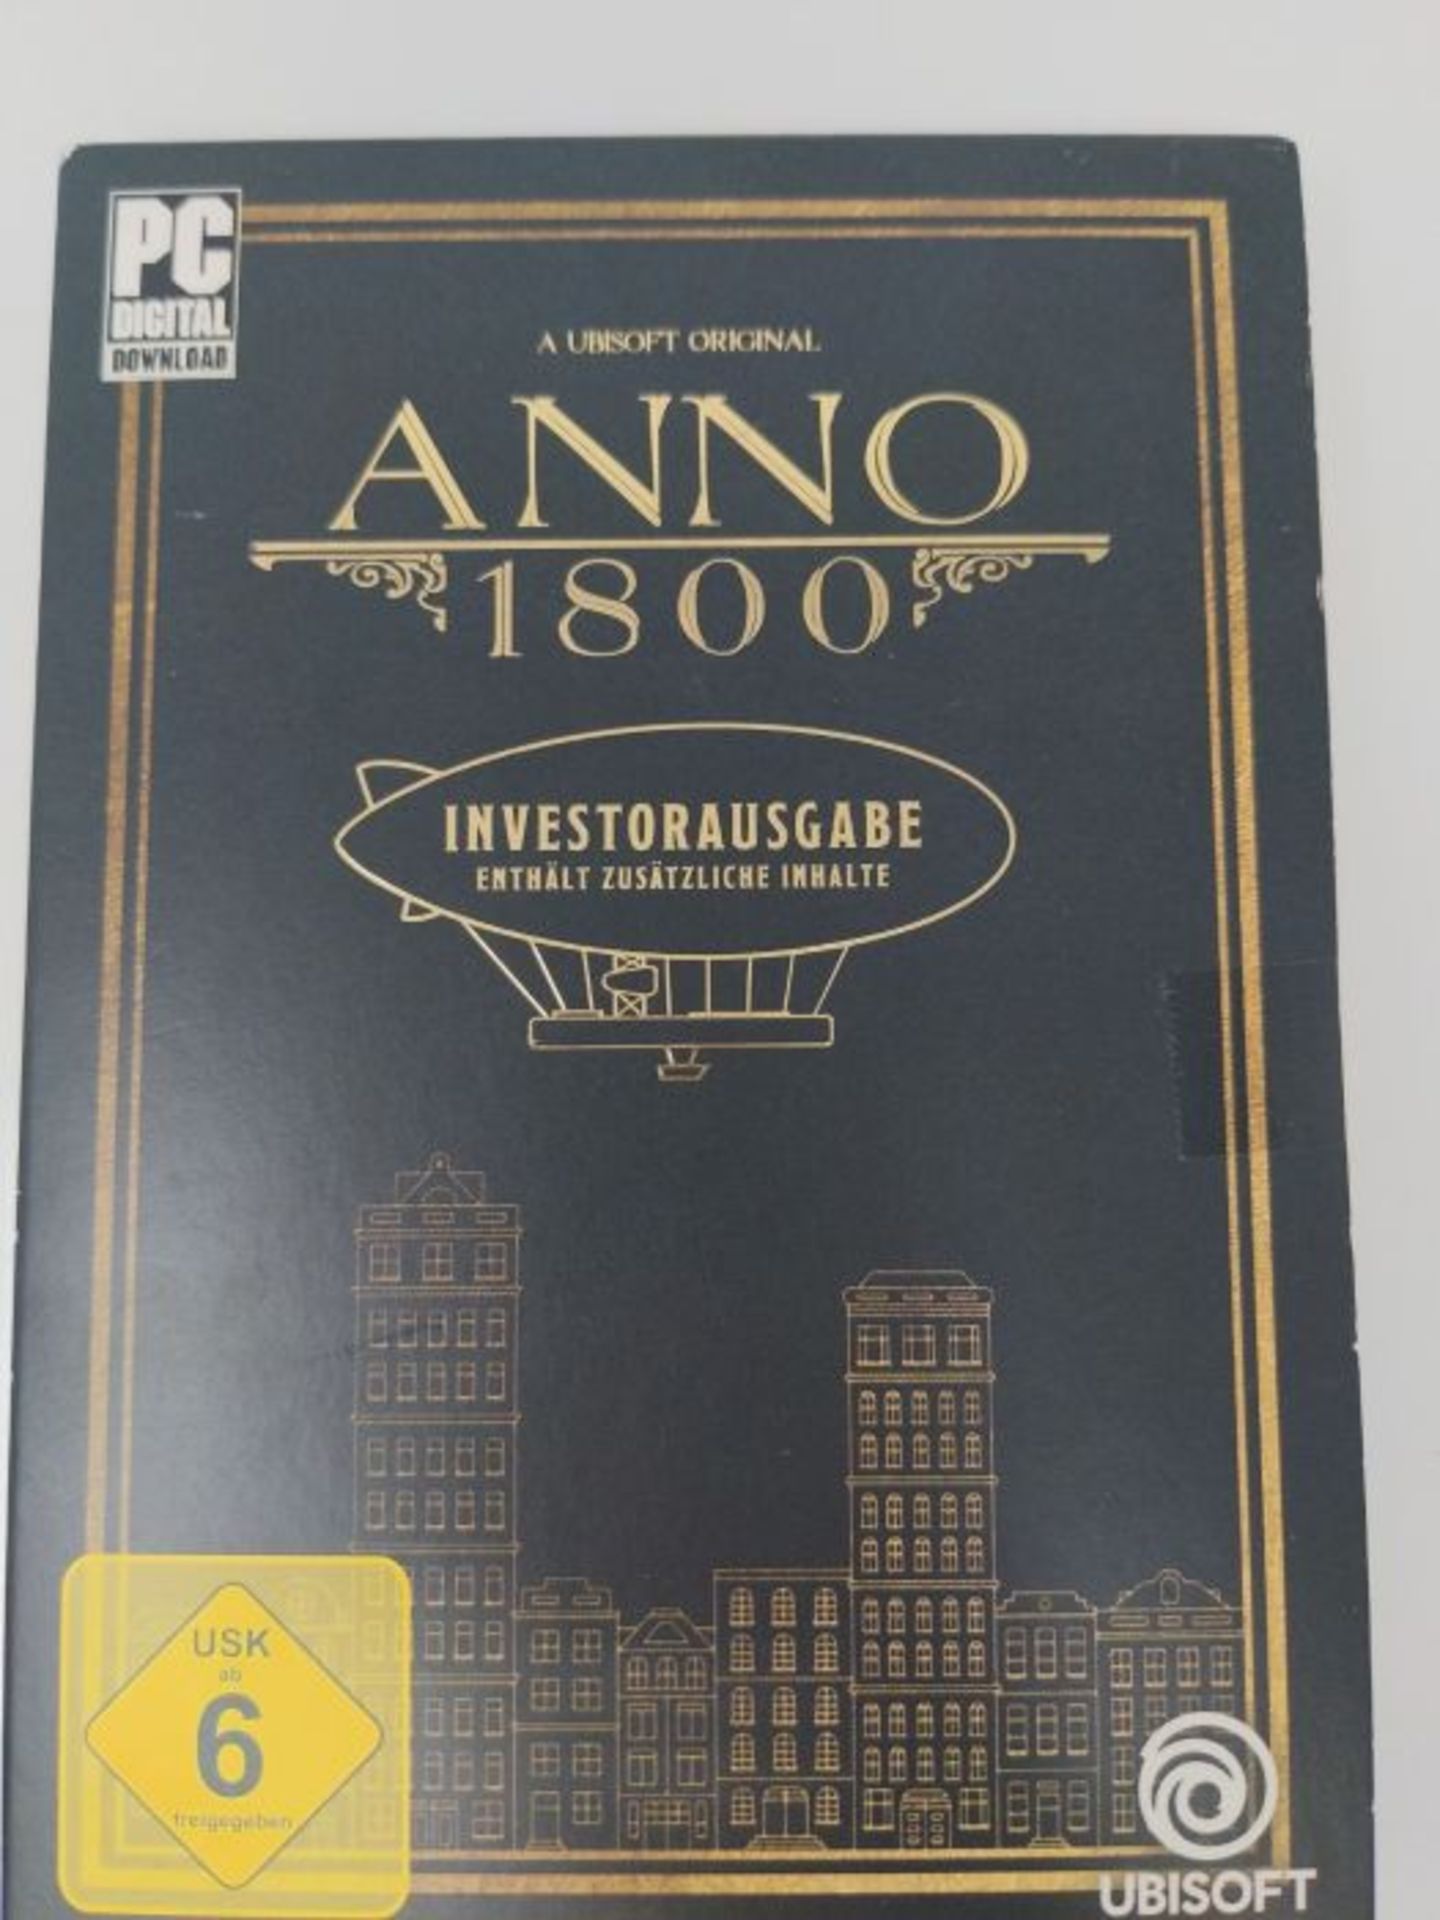 Anno 1800 PC Investorausgabe [German Version] - Image 2 of 3